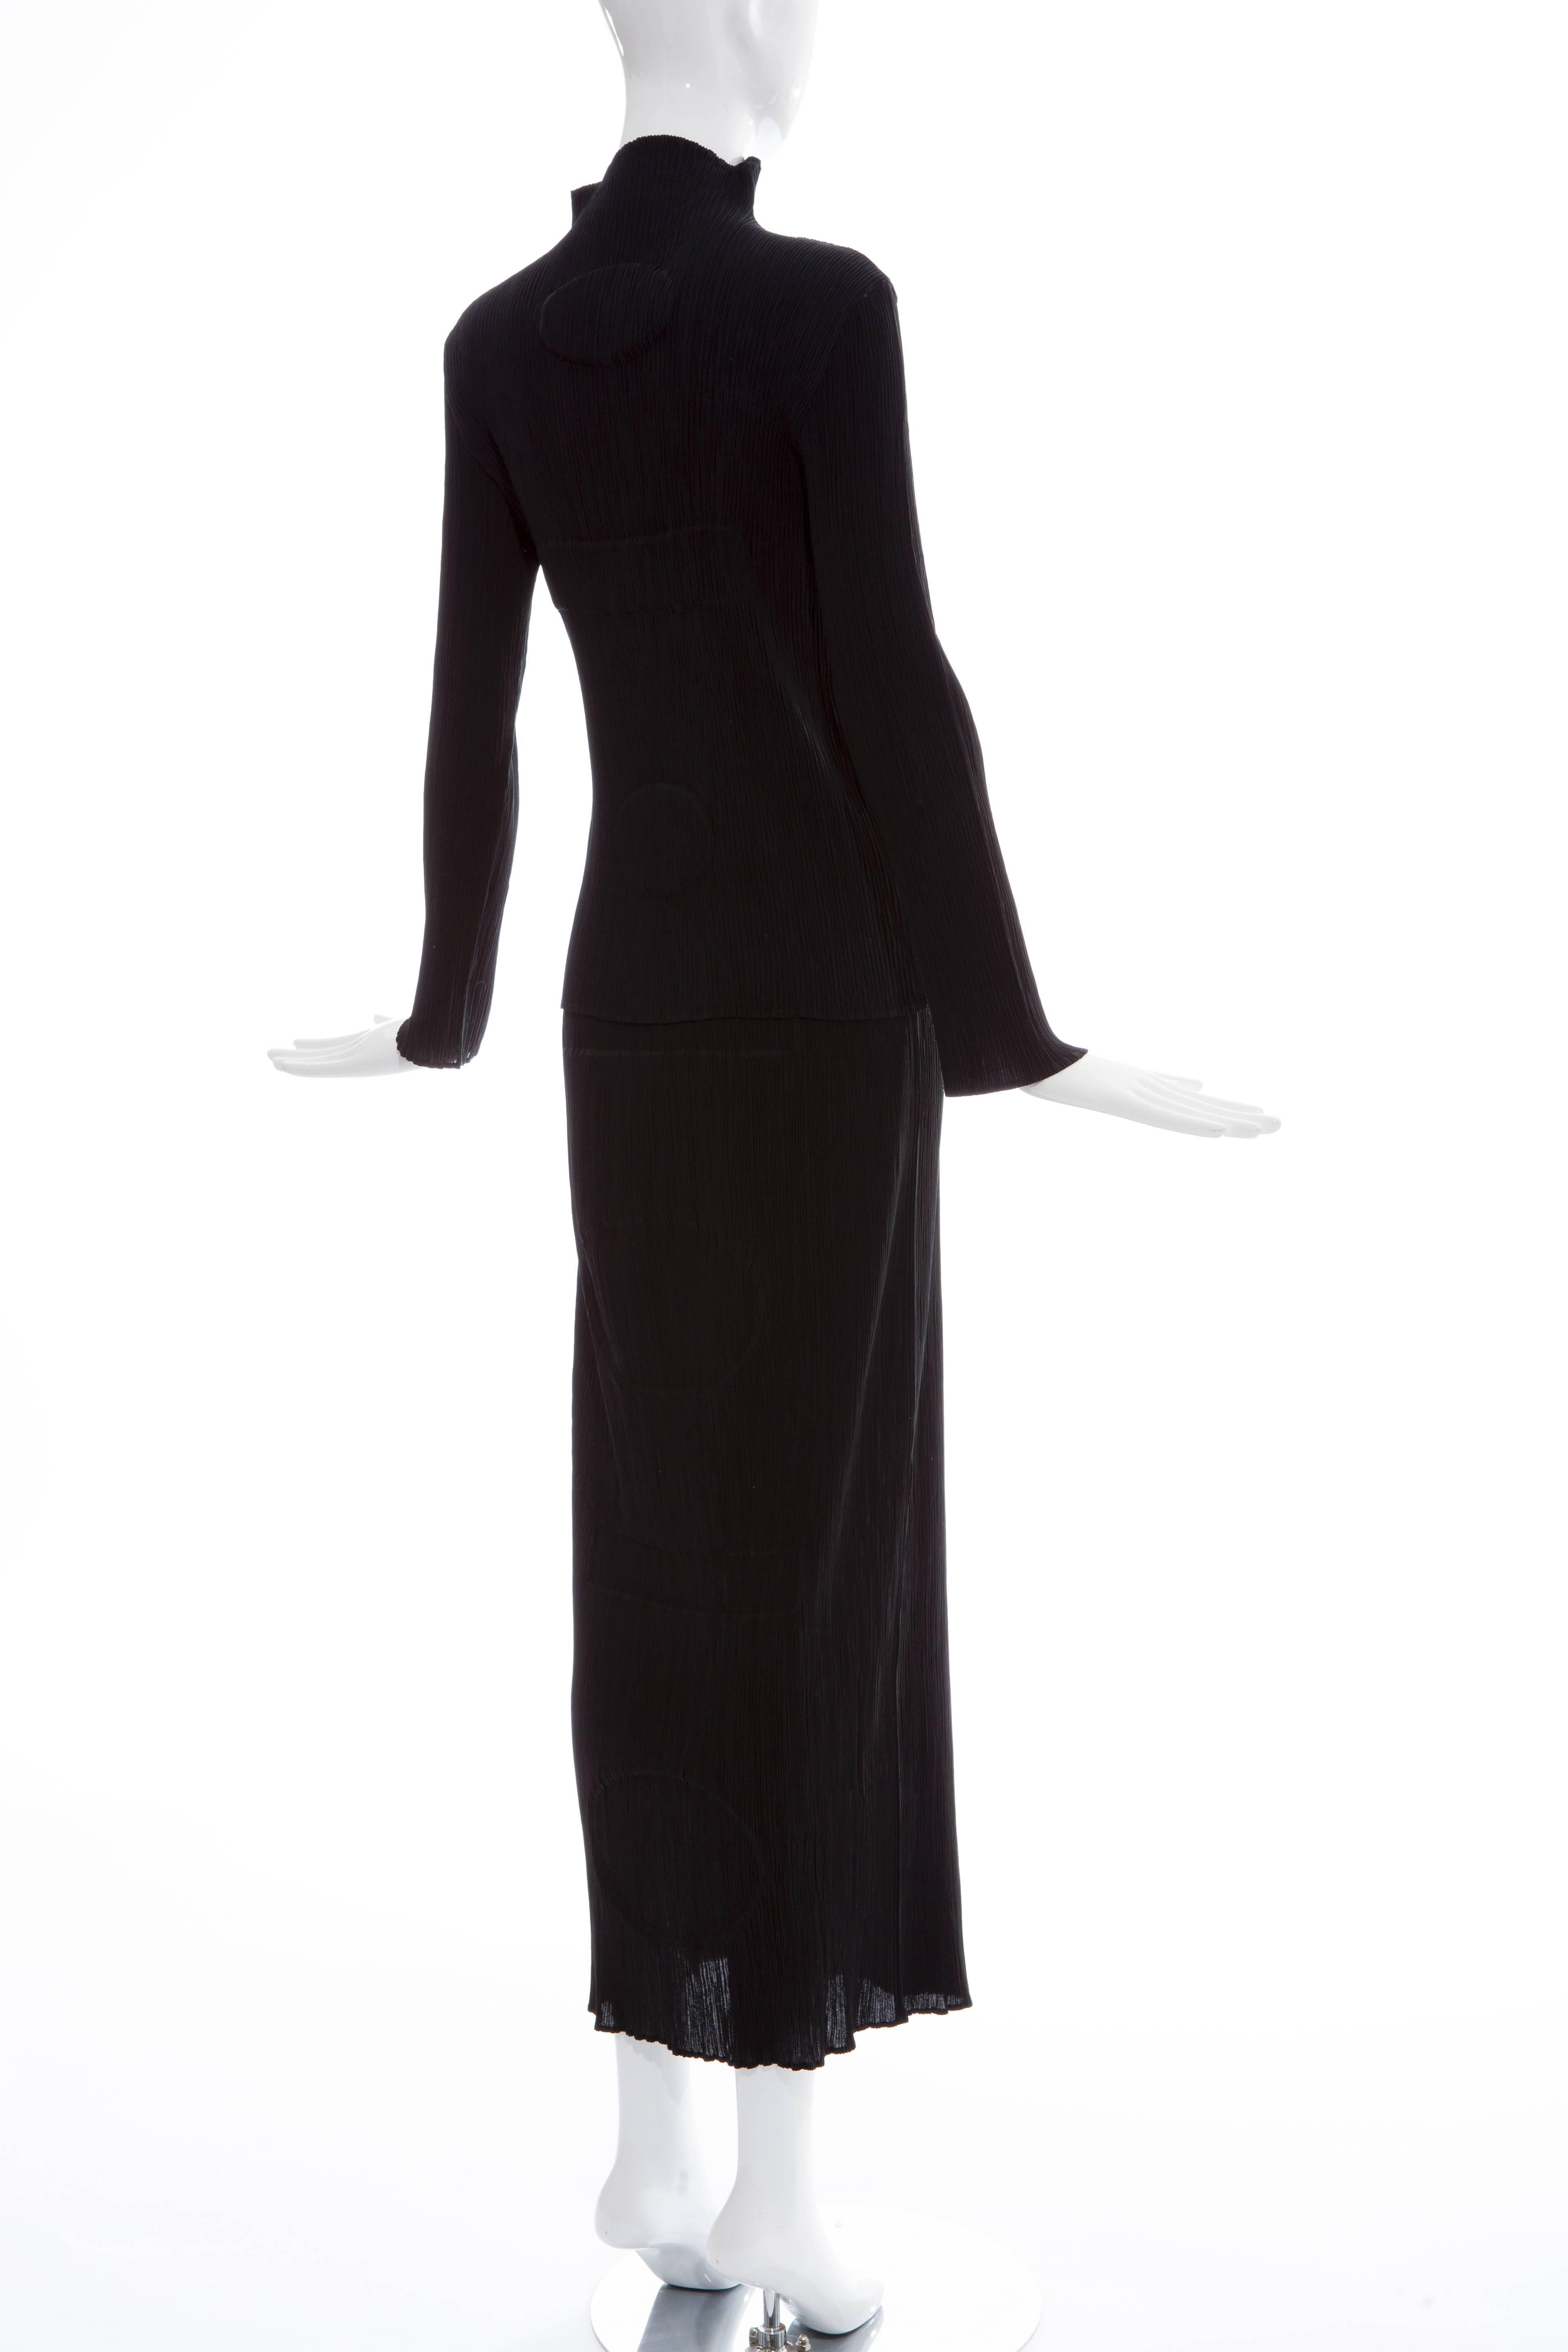 Women's Issey Miyake Black Micro Pleated Orb Skirt Suit, Circa 1990's